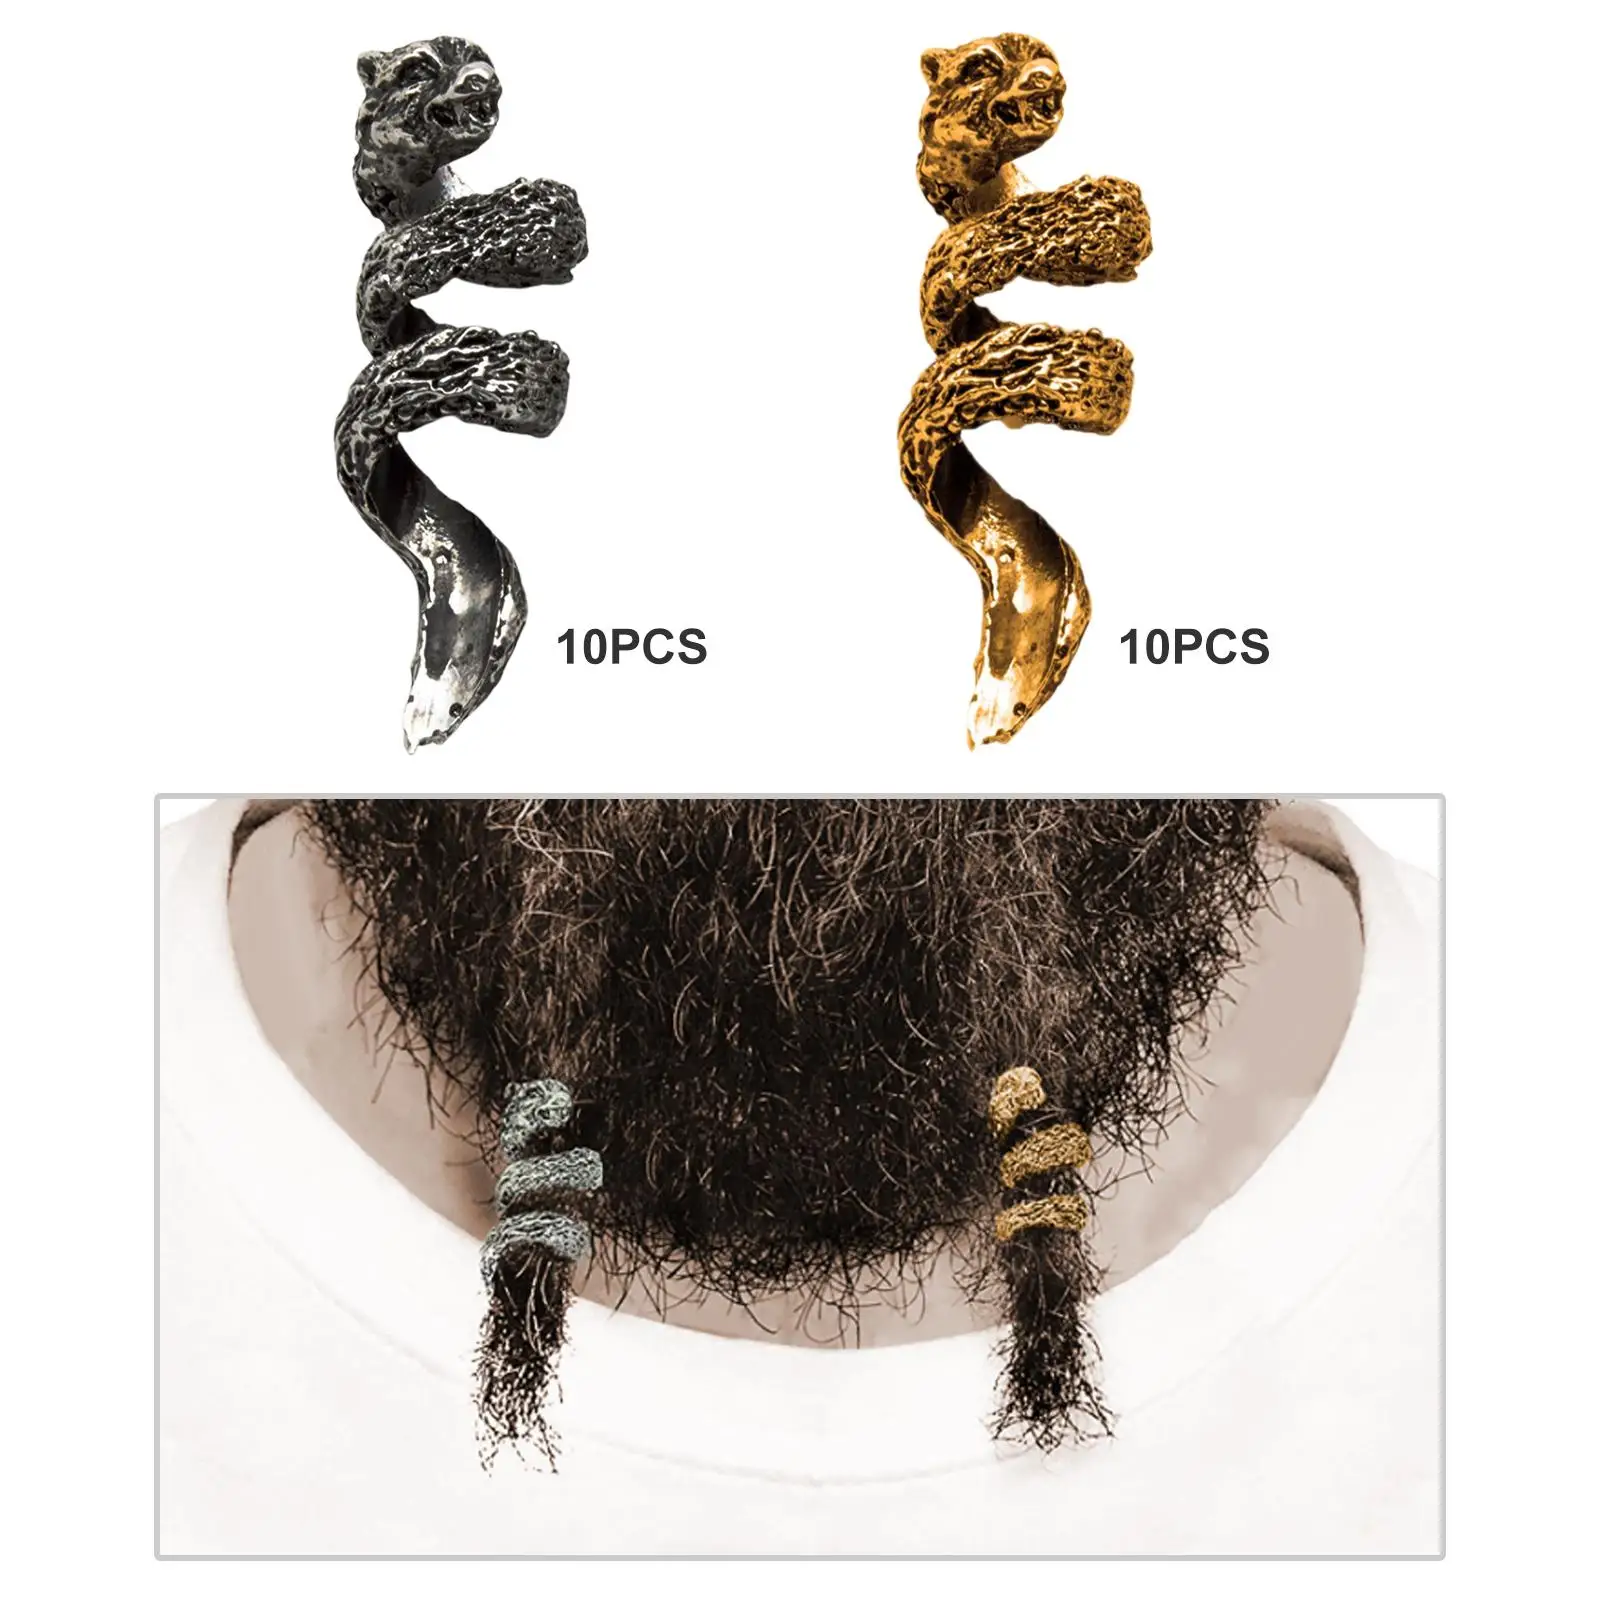 10 Pack Set   Coil Set Beards Pendants Hair Accessory Beard Beads for Men and Women